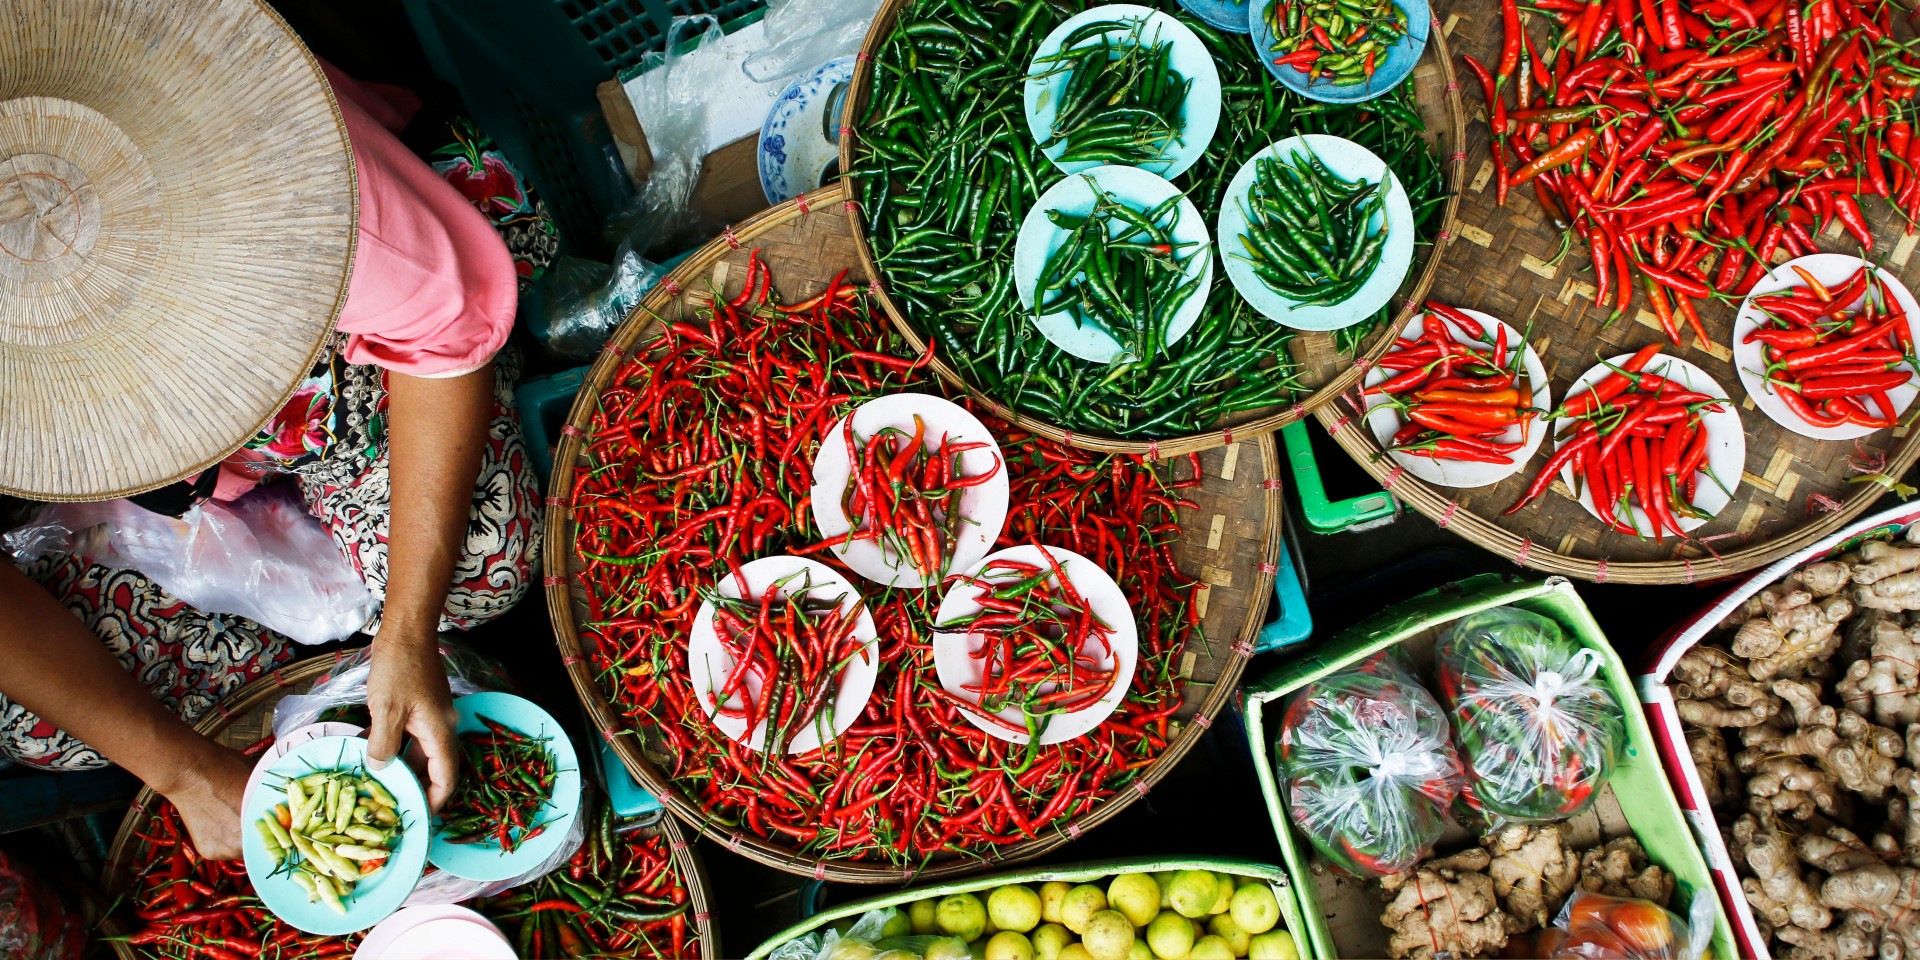 Market in Malaysia